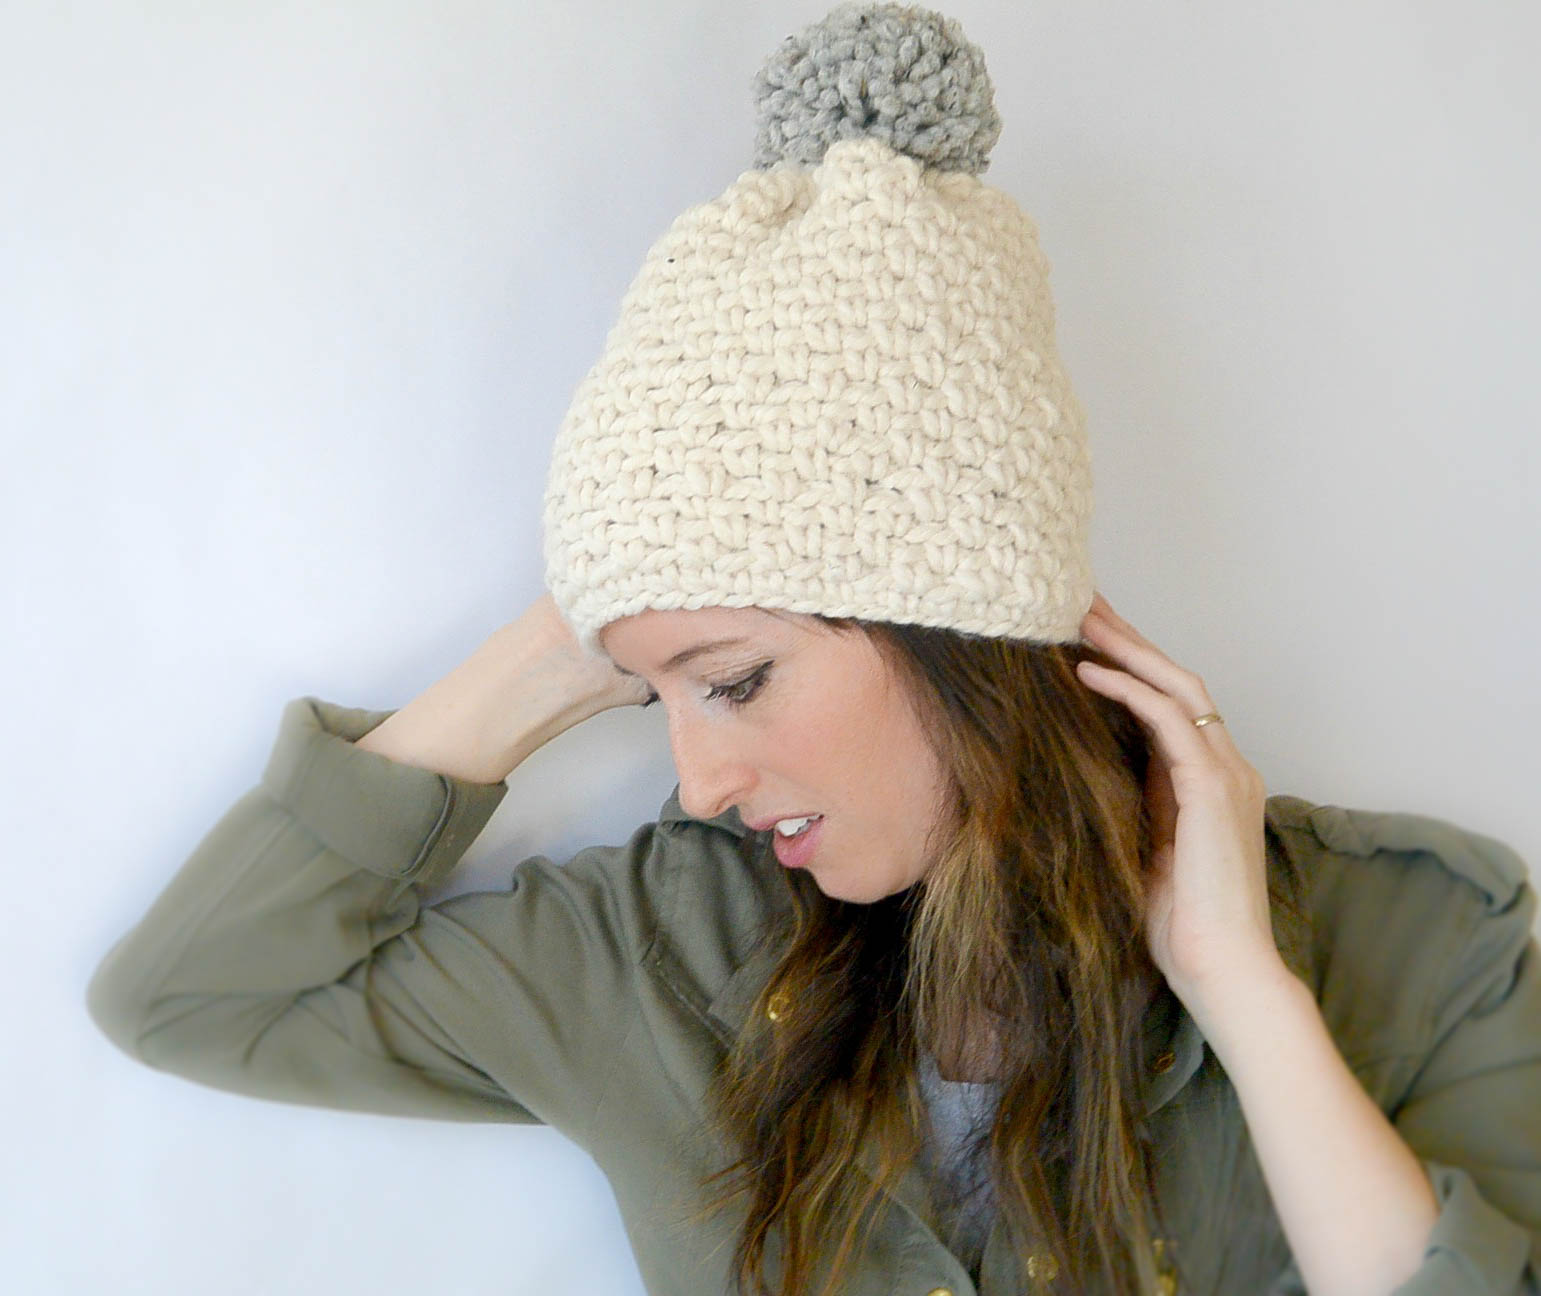 Tutorial: How to make a quick pom-pom for a knit hat